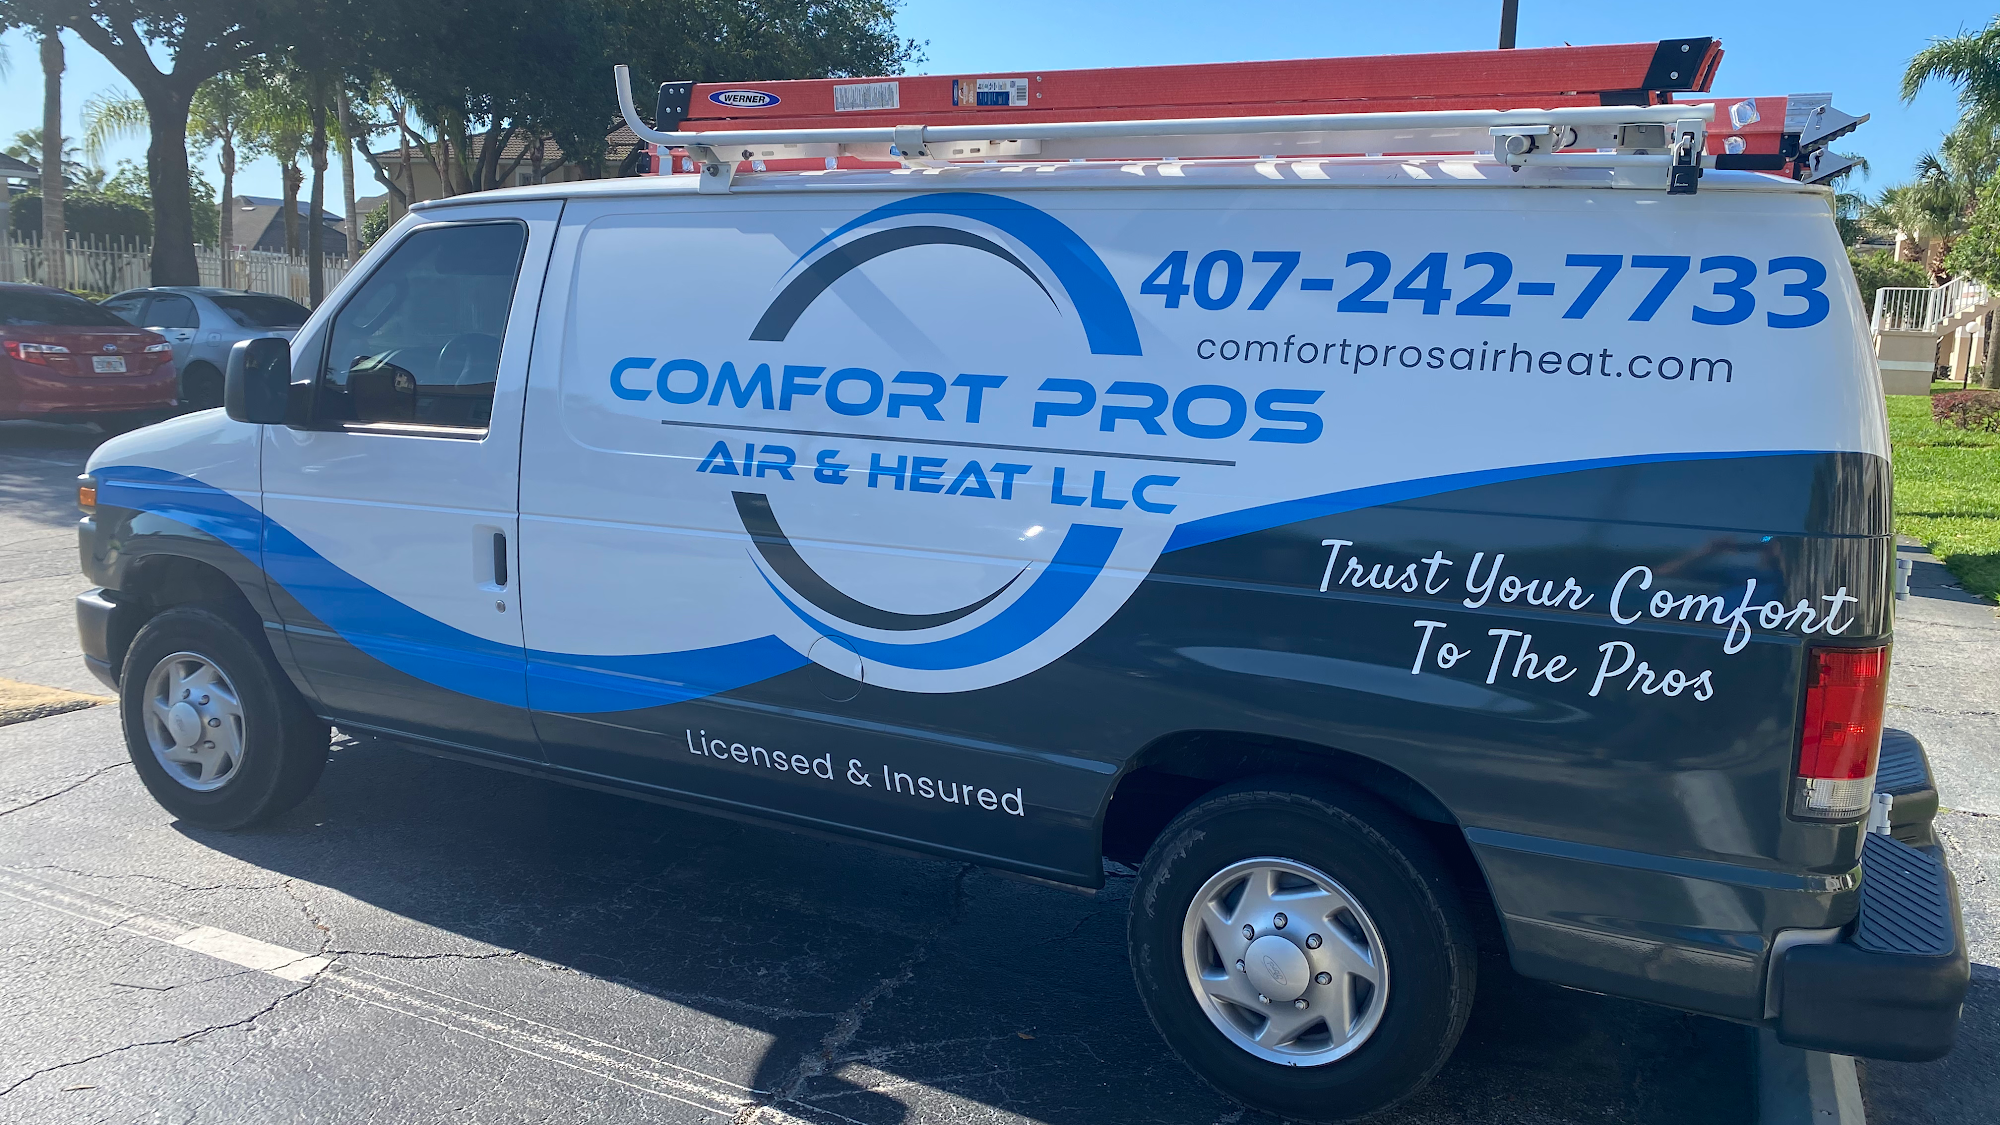 Comfort Pros Air & Heat, LLC